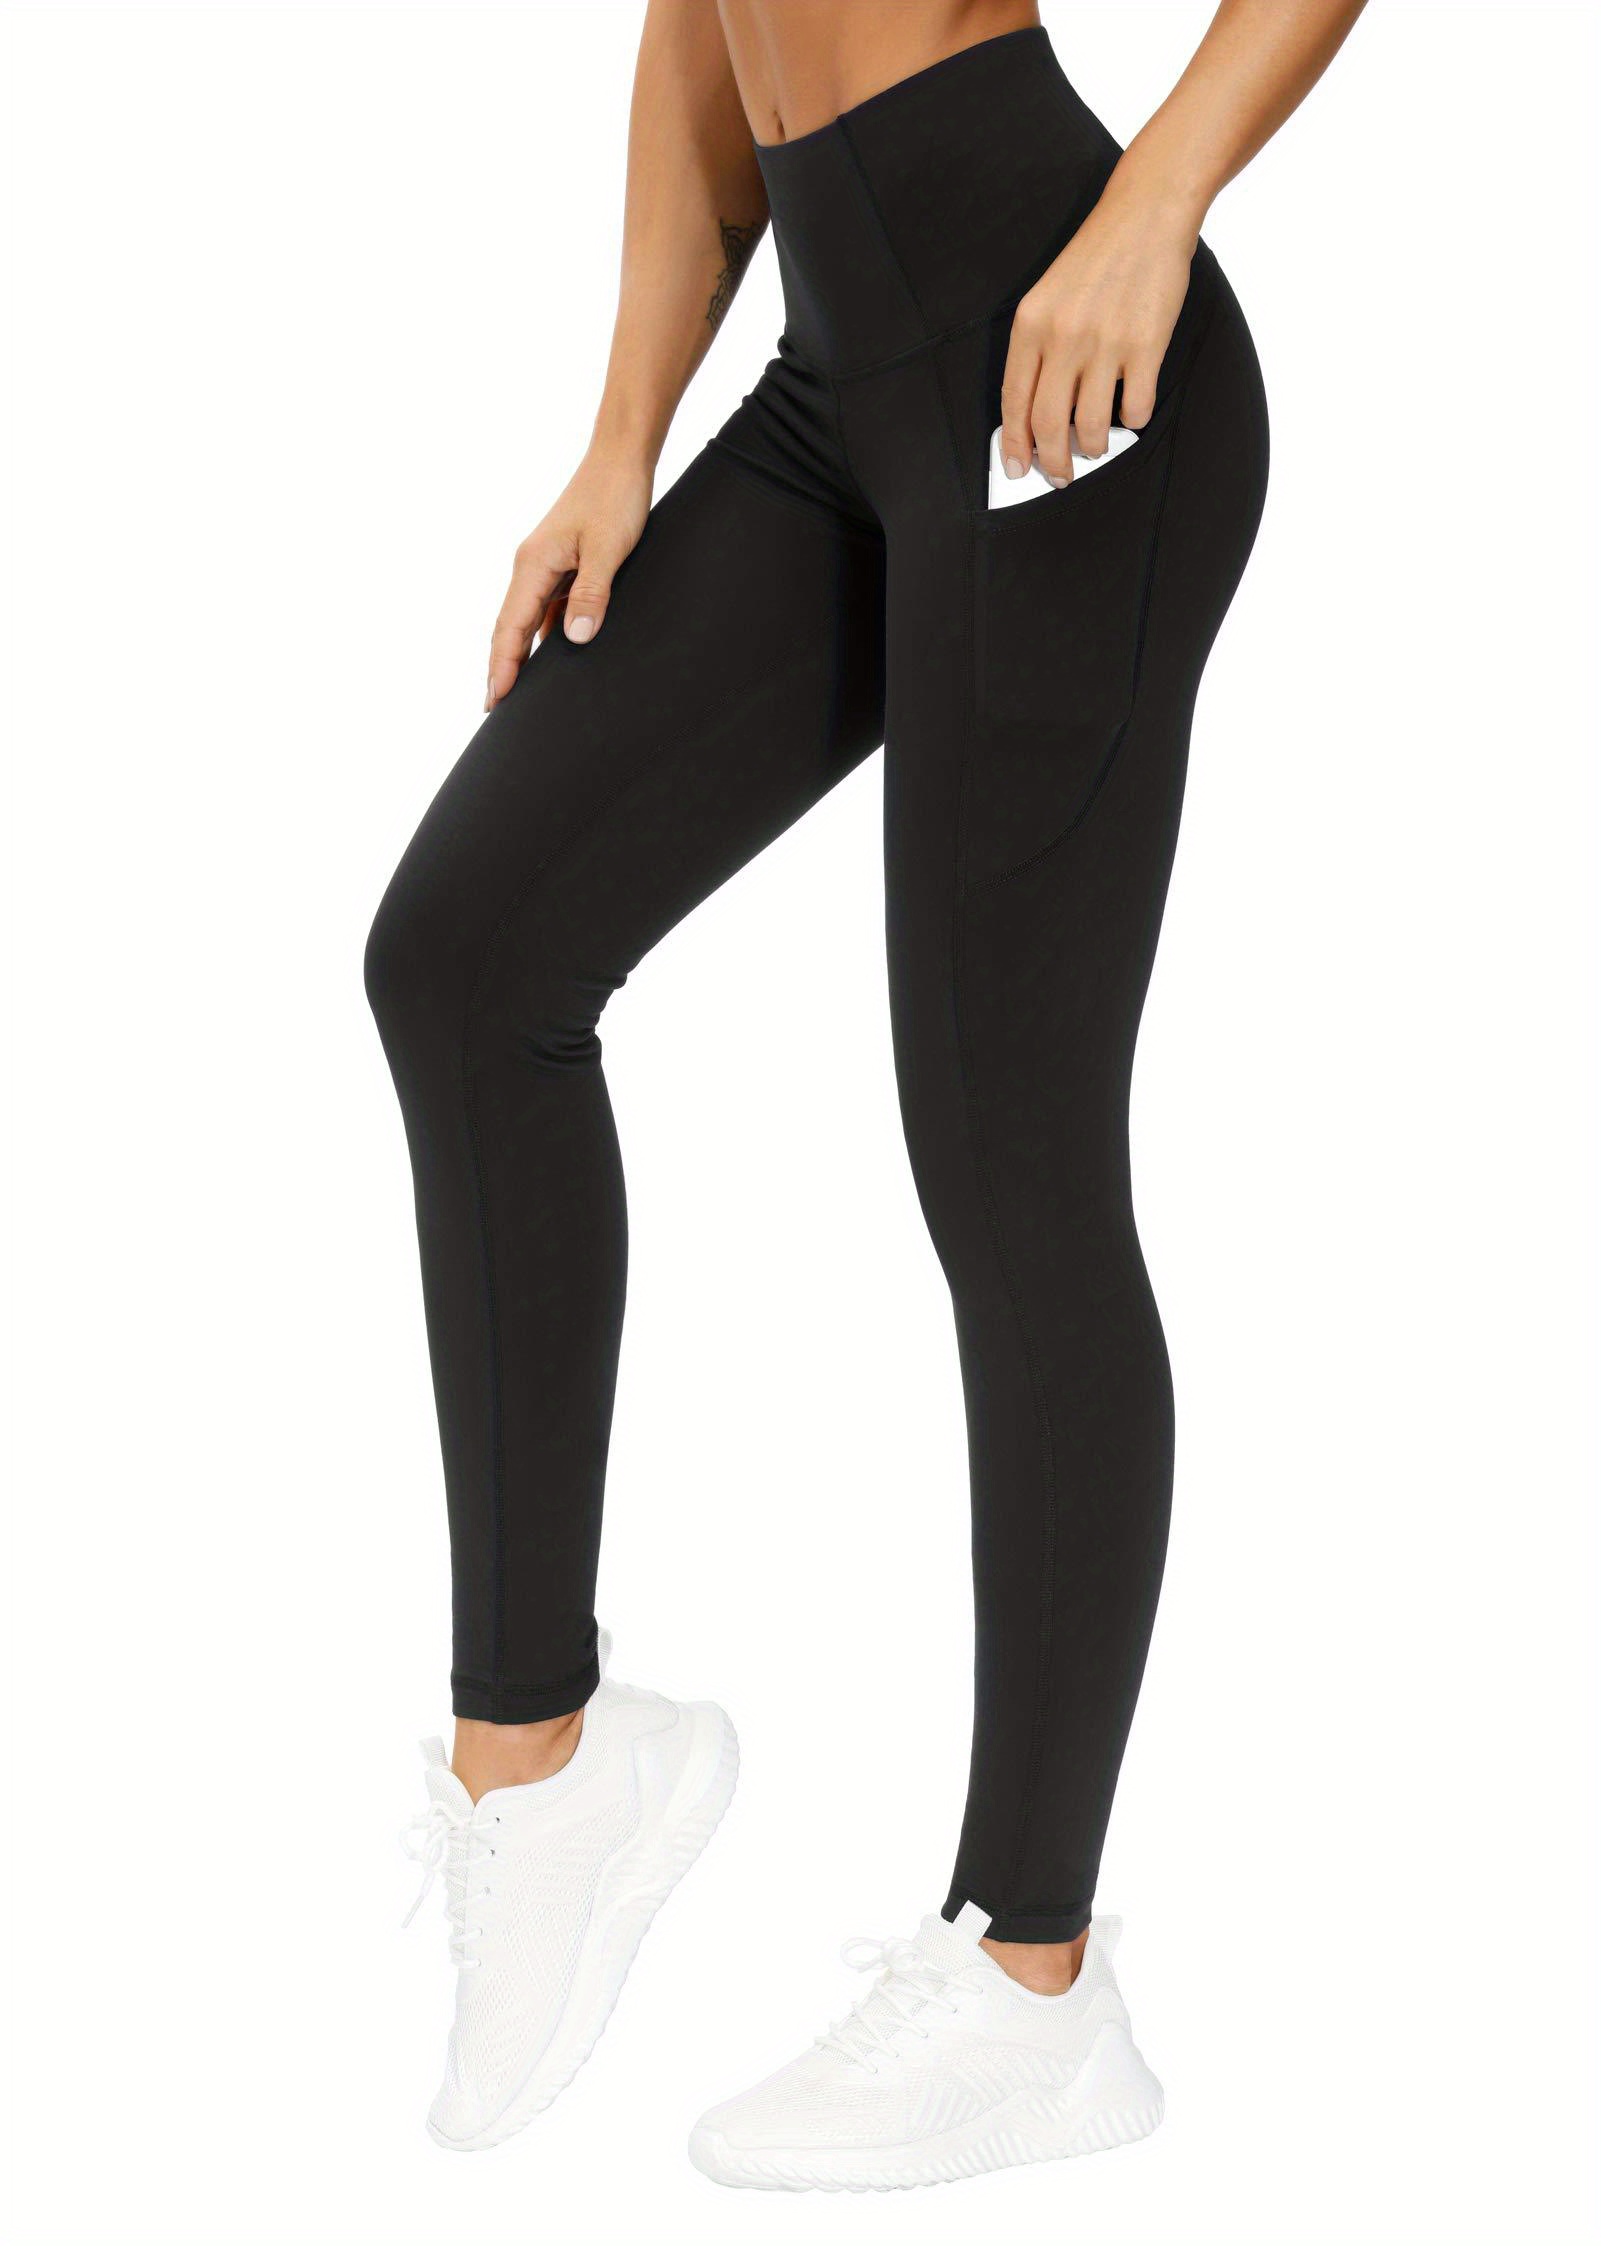 Women's Yoga Pants Tummy Control Butt Lift High Waist Yoga Fitness Gym  Workout Cropped Leggings Print White / Black Black Black White Sports  Activewea